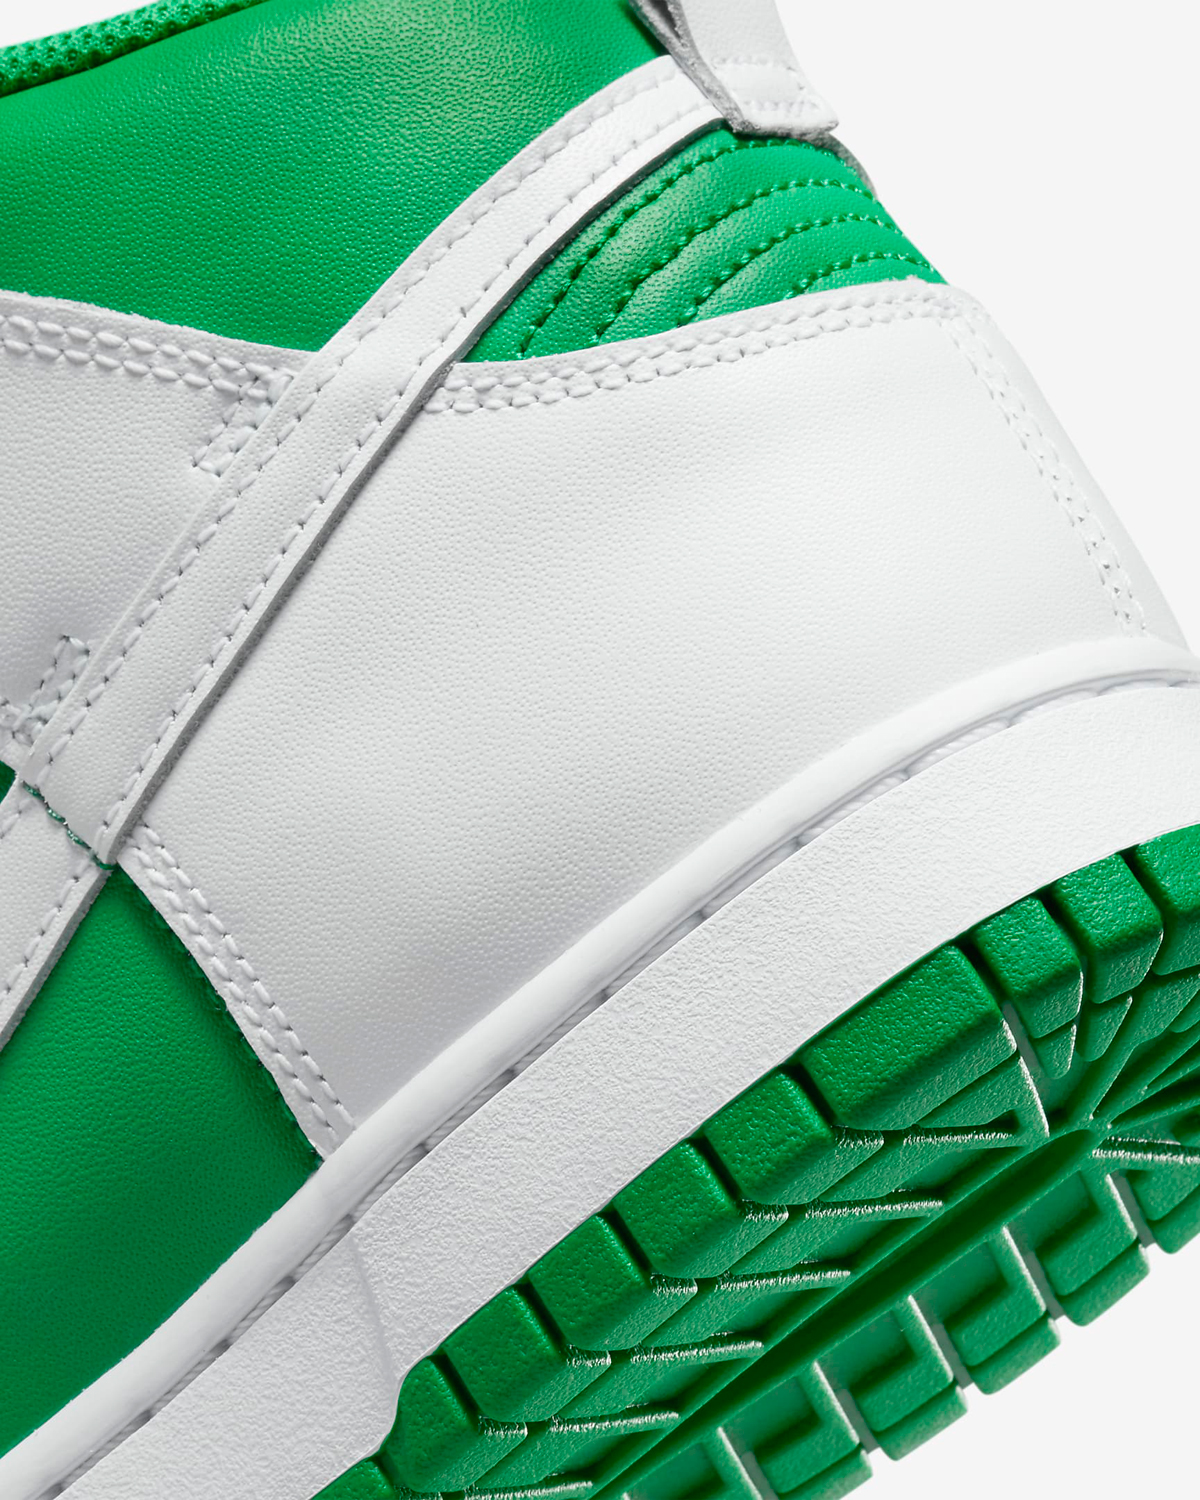 Nike-Dunk-High-Stadium-Green-Release-Date-8